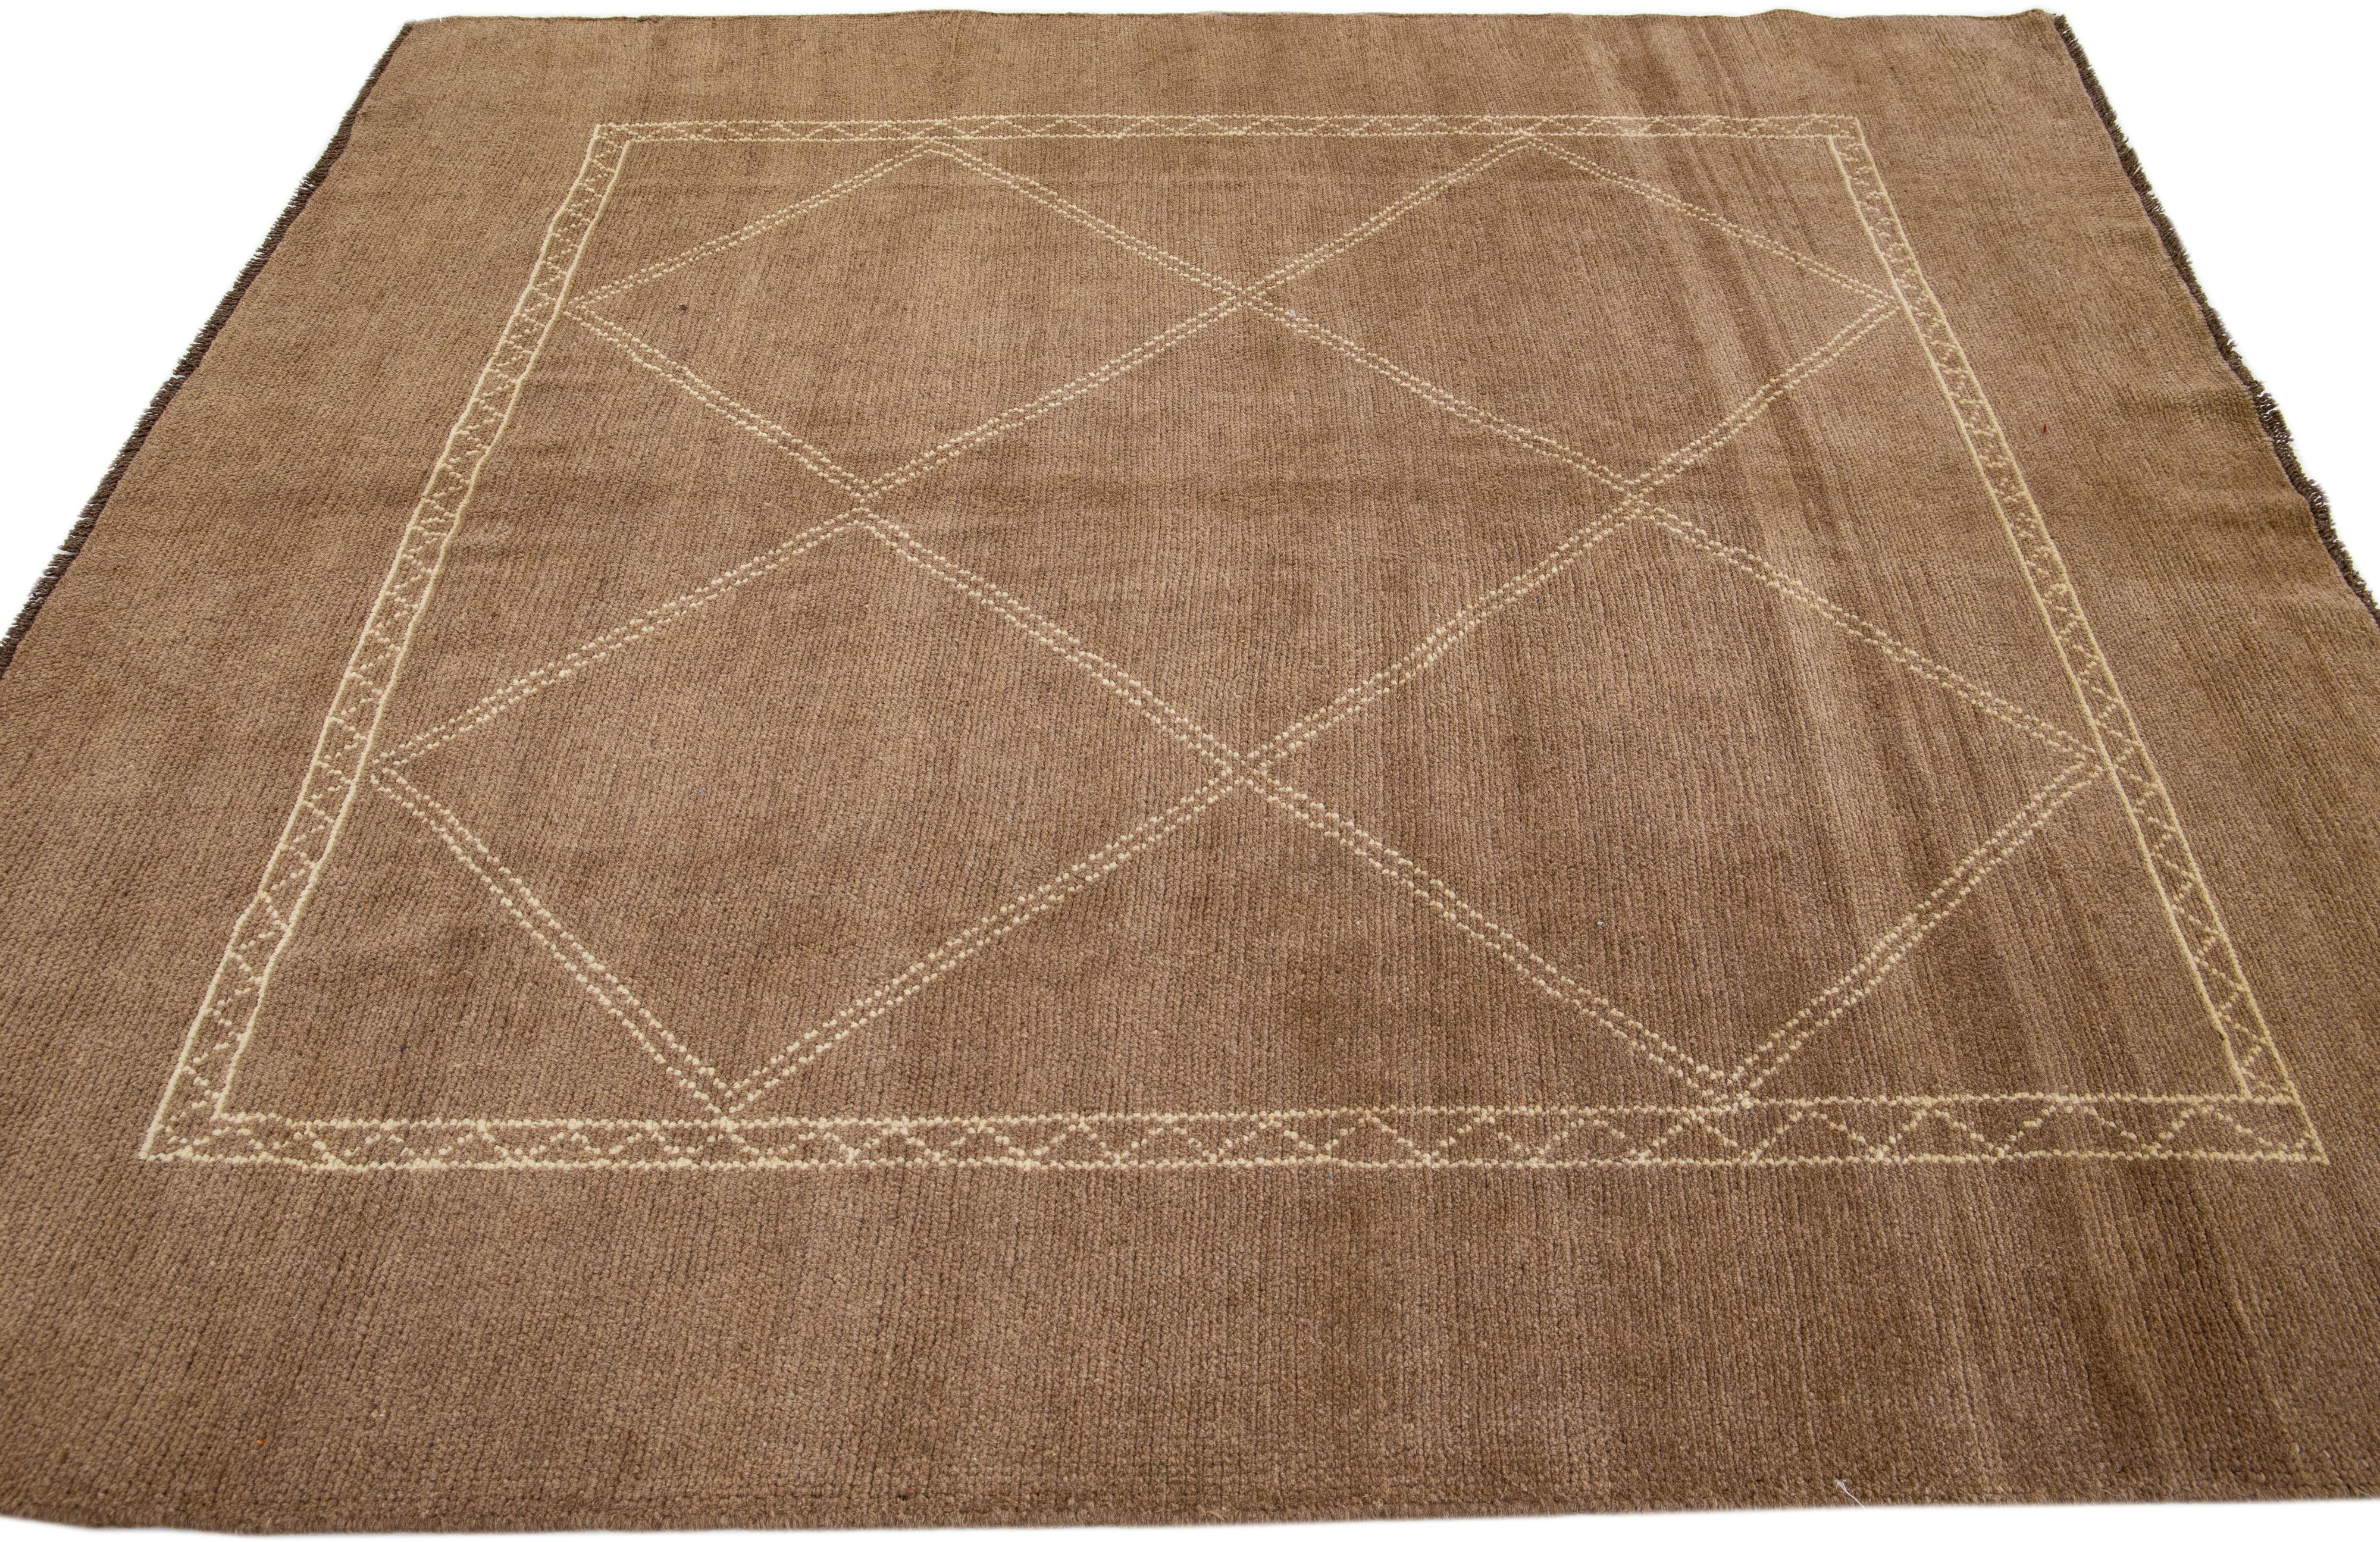 Contemporary Modern Moroccan Style Light Brown Handmade Geometric Square Wool Rug by Apadana For Sale